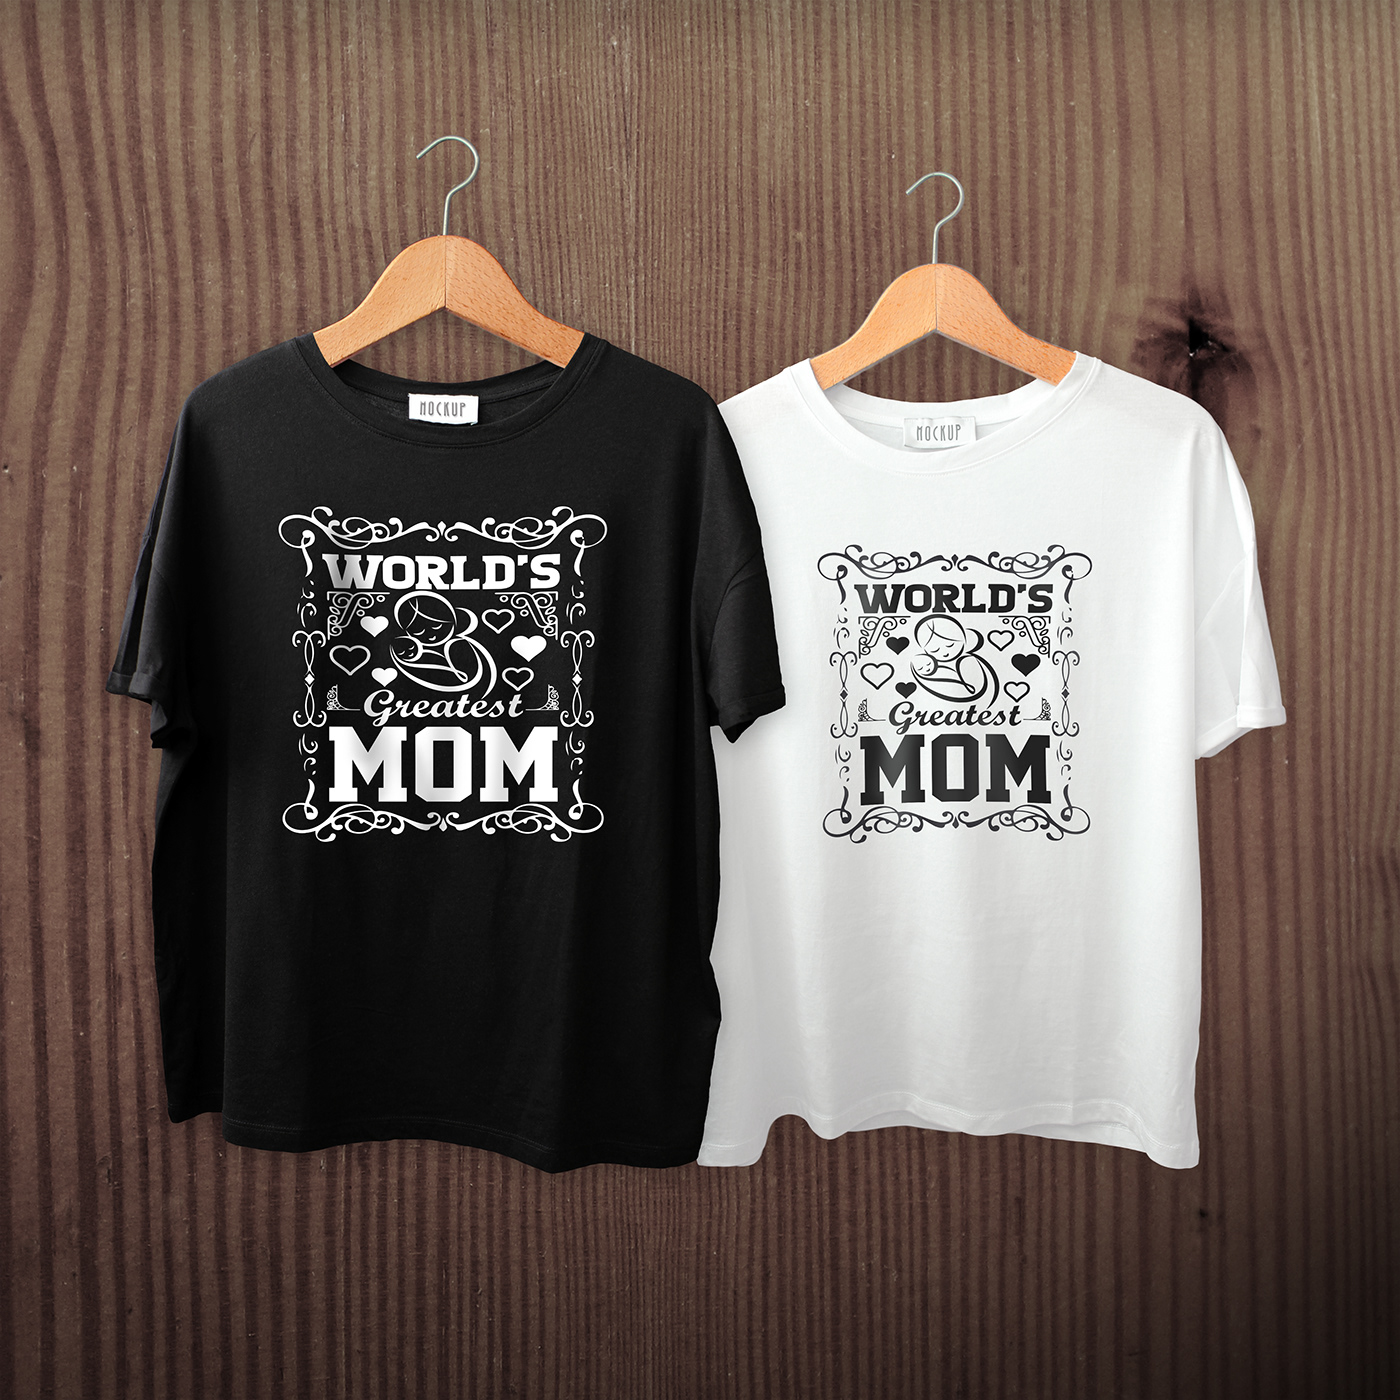 Amazon t shirt best mom t-shirt design cool mom t-shirts funny mom shirt ideas funny mom t-shirts lovely mom t shirt mom shirts  mom mom t-shirt ideas mom t-shirts shirts with names